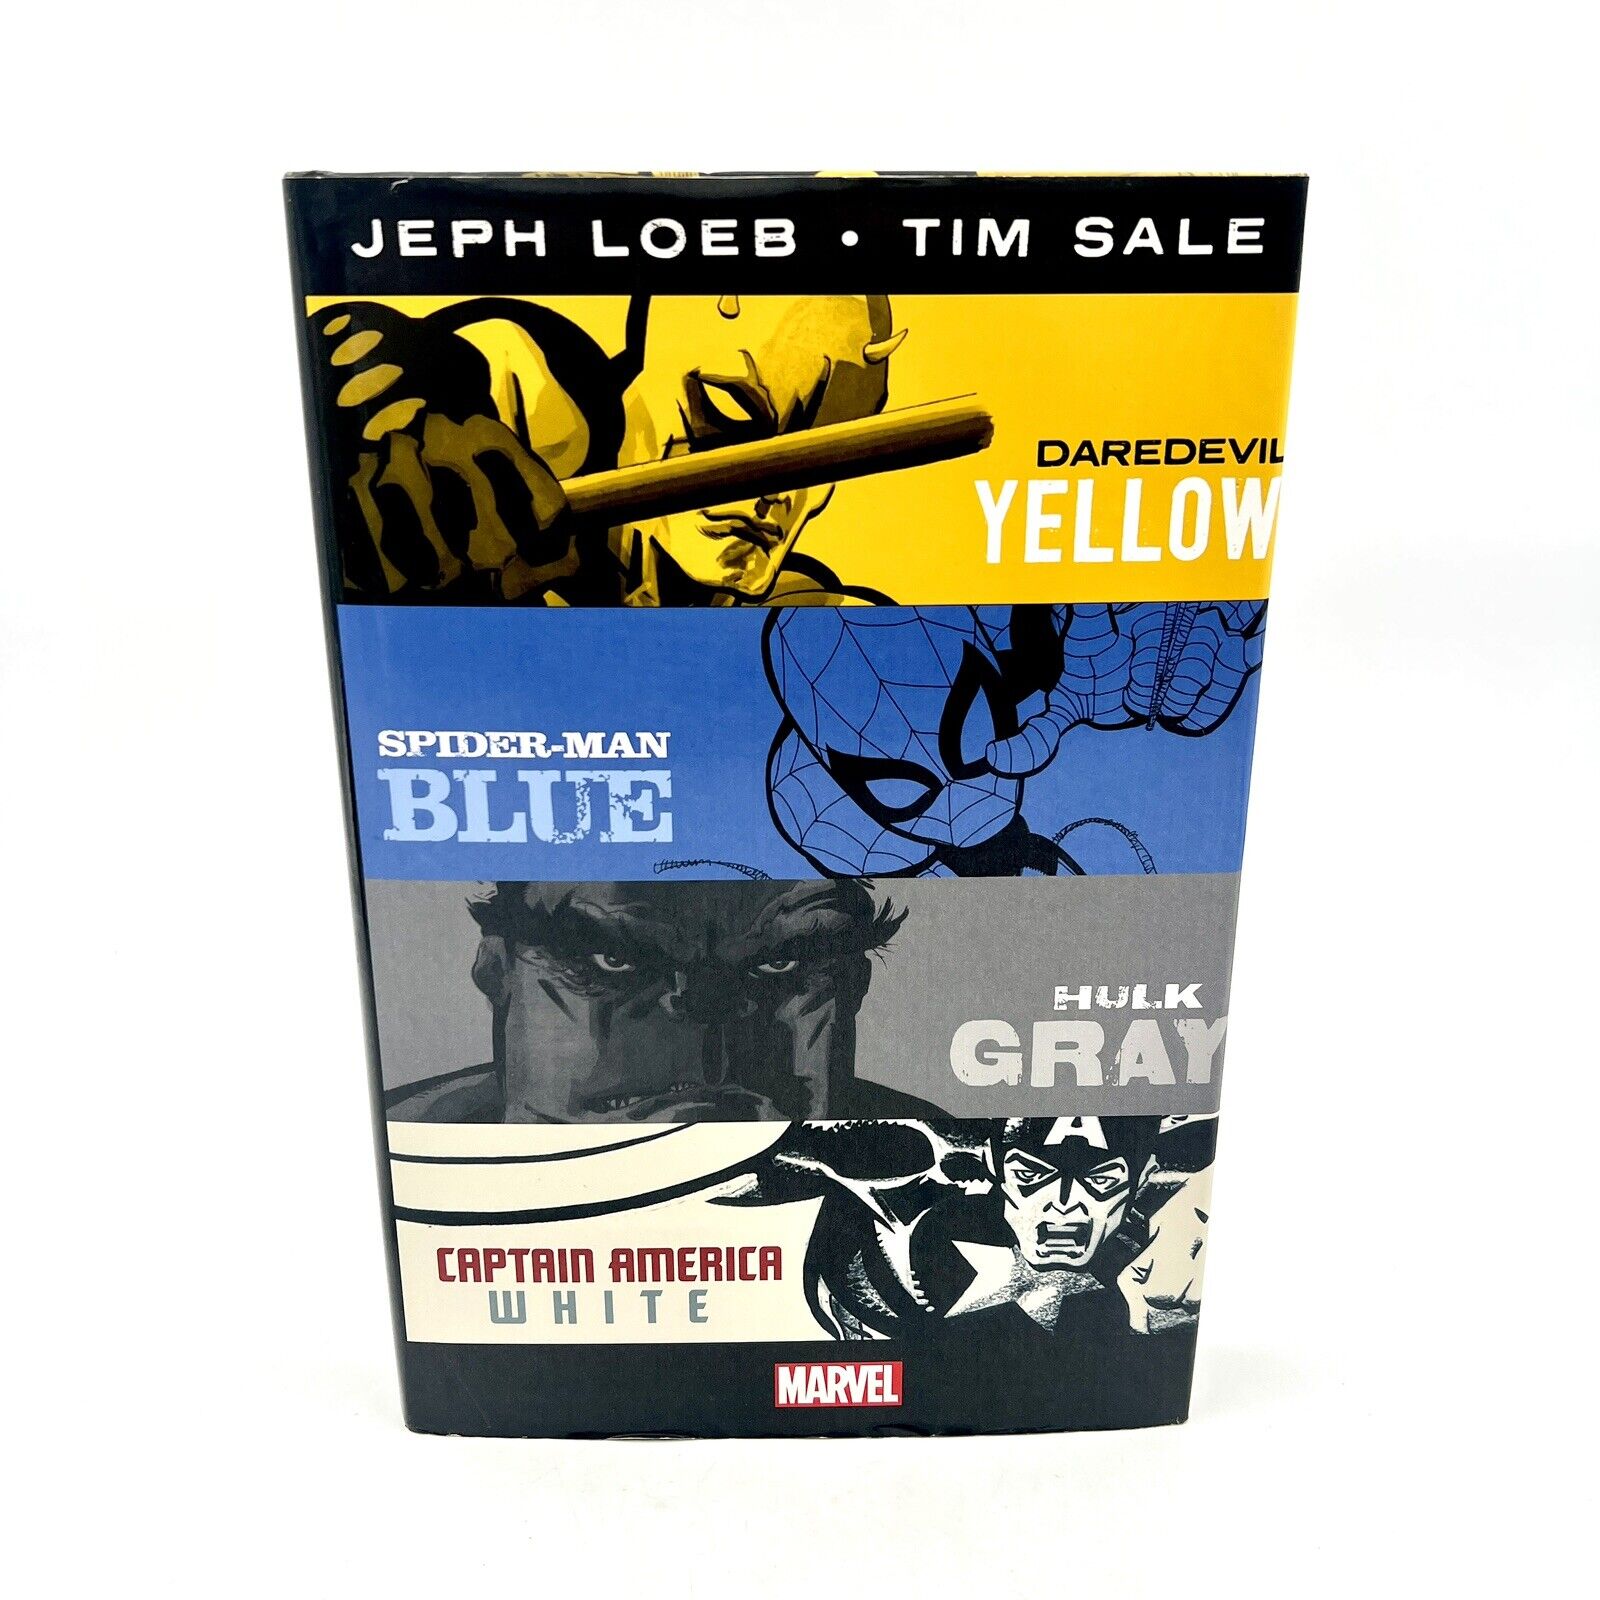 Jeph Loeb Tim Sale Yellow Blue Gray White Hardcover OHC - Omnibus Marvel Comics